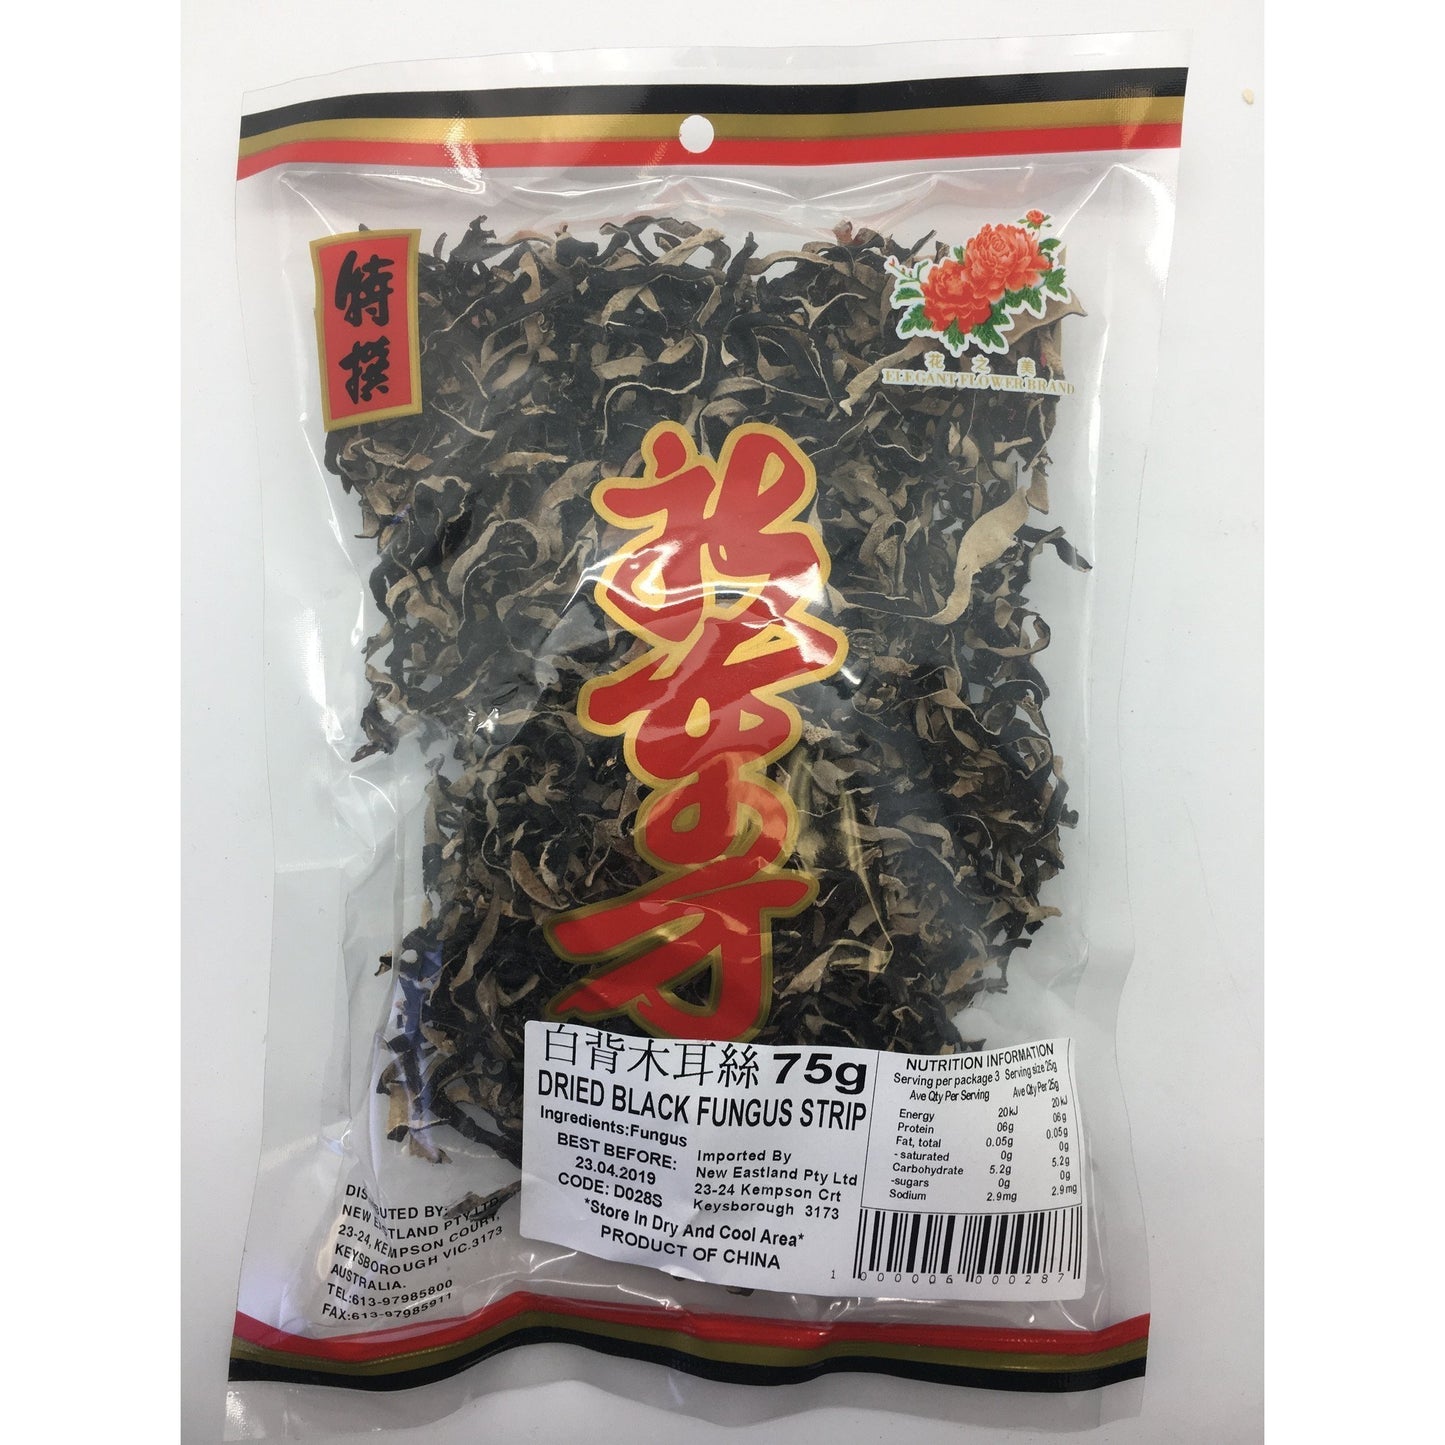 D028S New Eastland Pty Ltd - Dried Black Fungus Strip 75g  - 50 bags / 1 CTN - New Eastland Pty Ltd - Asian food wholesalers